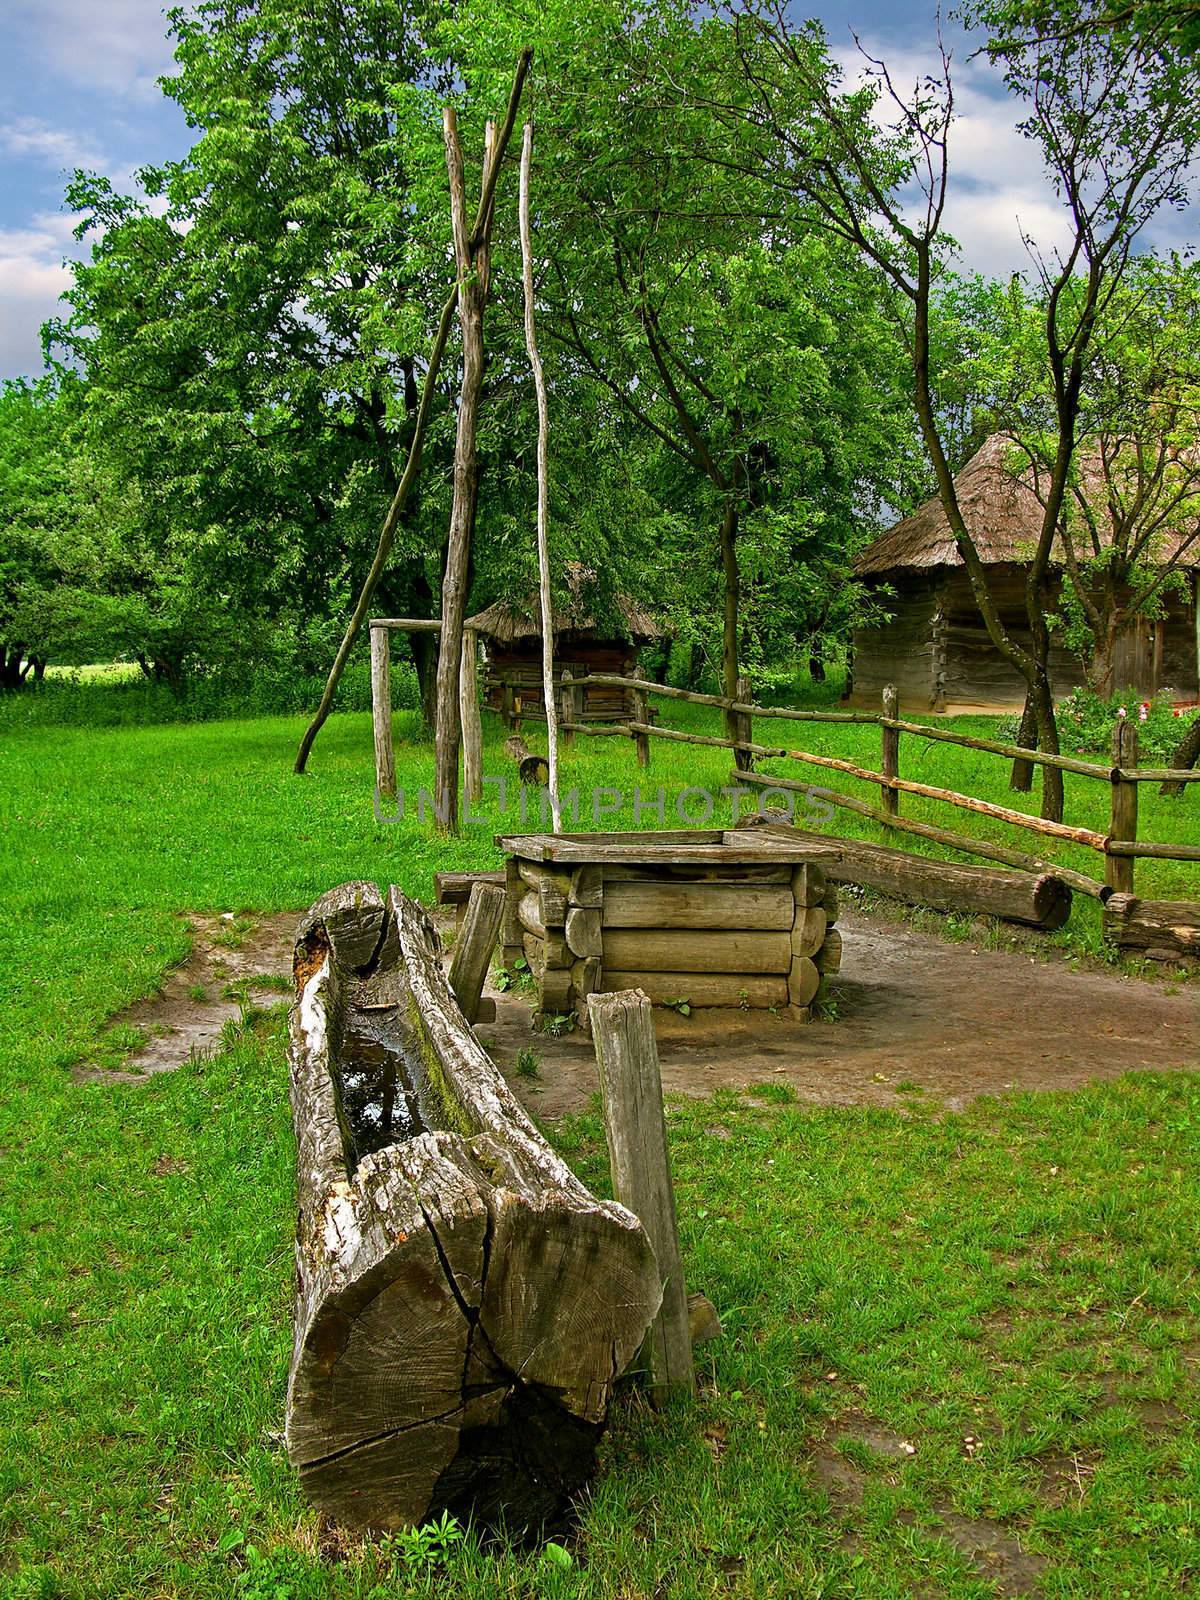 fragment of Ukrainian  life under the open air in the Pirogovo village.